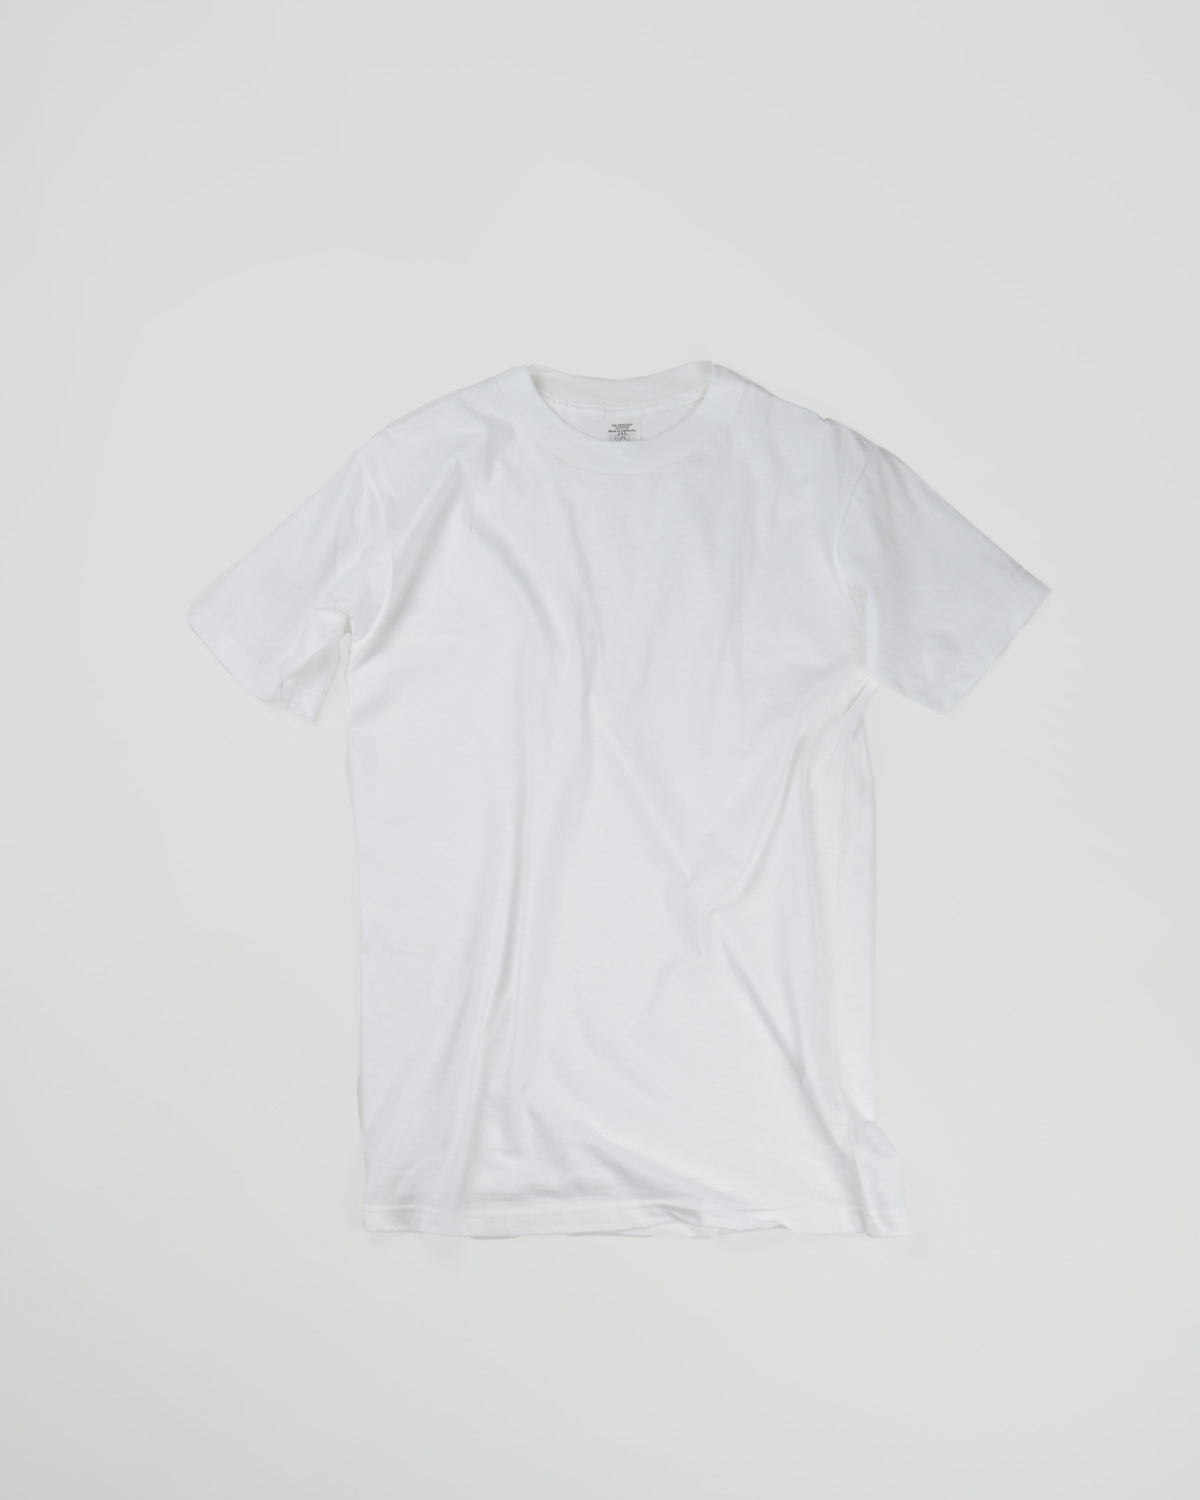 3-pack Campbellsville Apparel White V-Neck T-Shirt 100% Cotton DLA